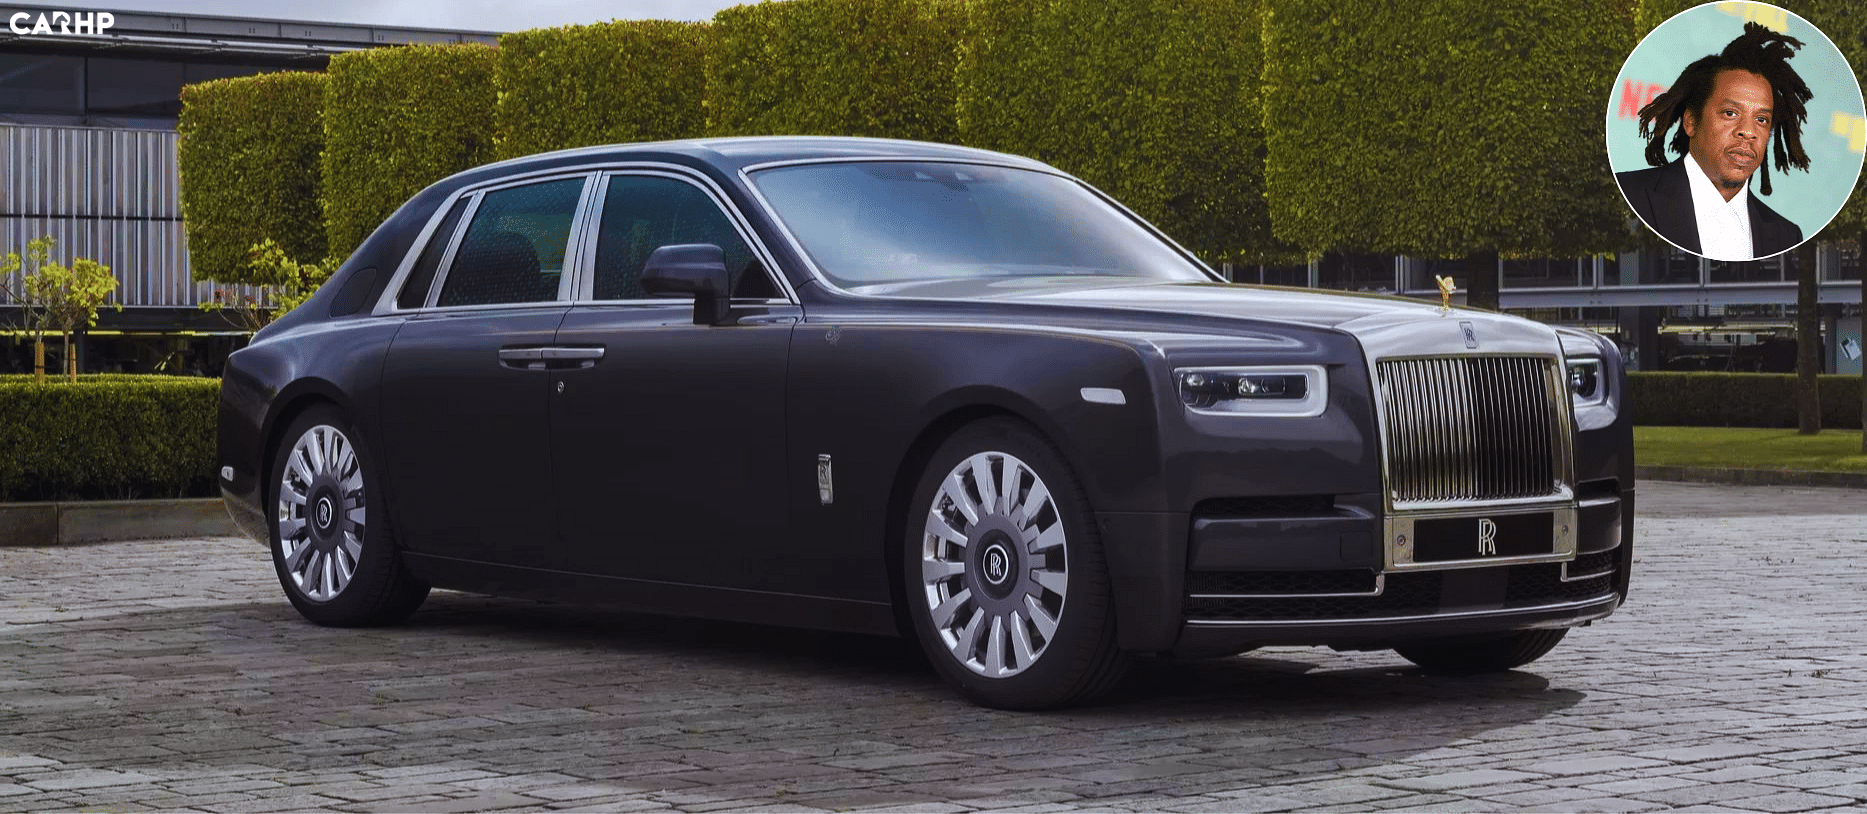 Jay-Z's Rolls-Royce Phantom